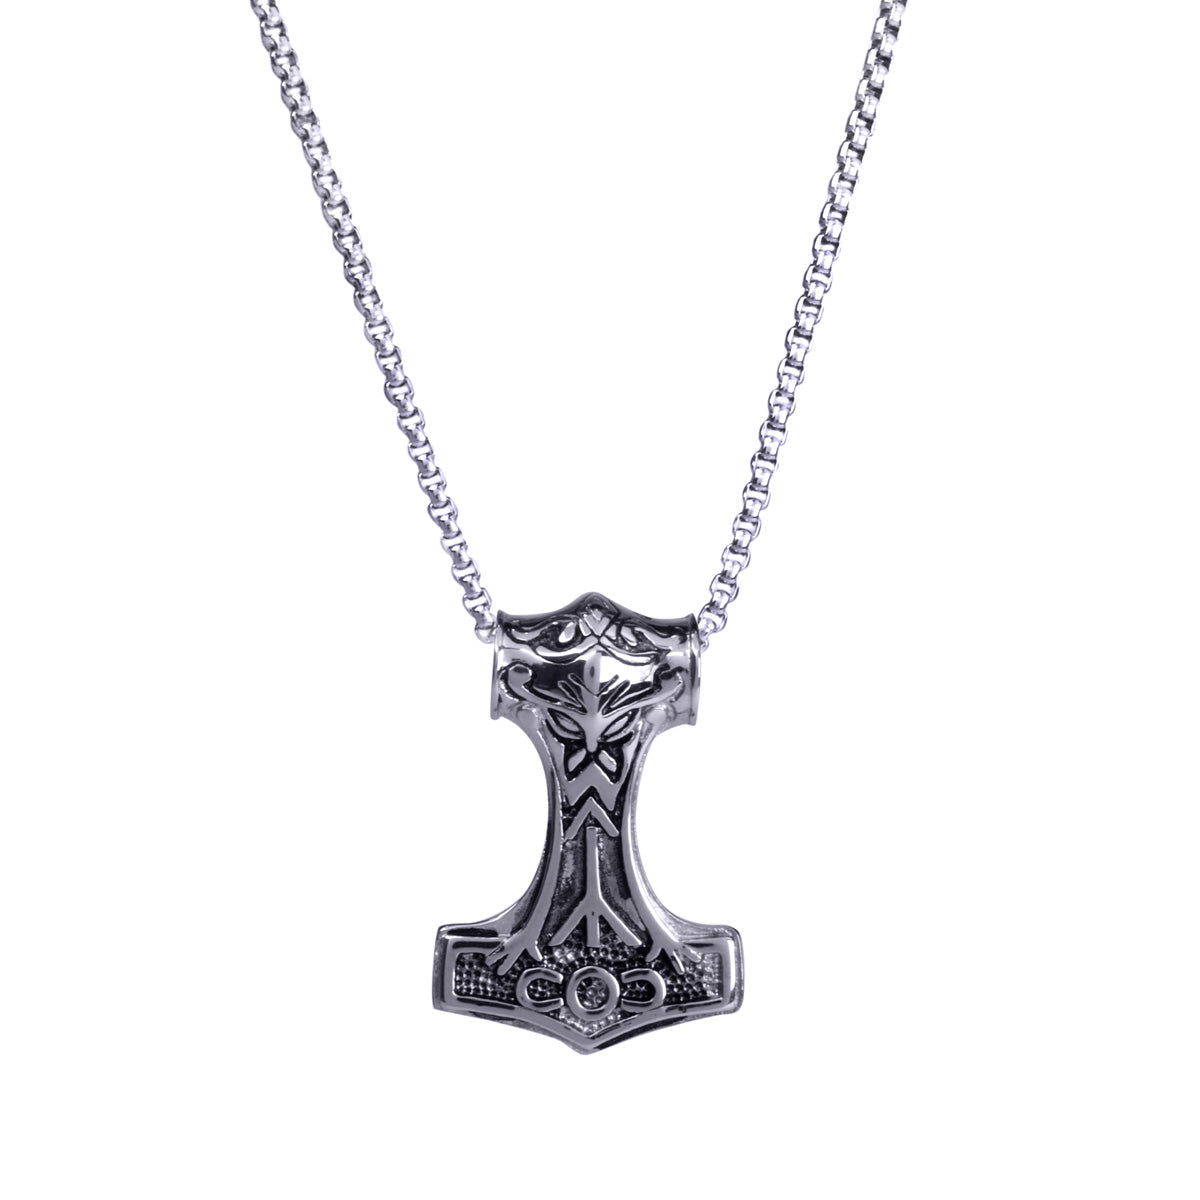 Steel pendant necklace 60cm (steel 316L)